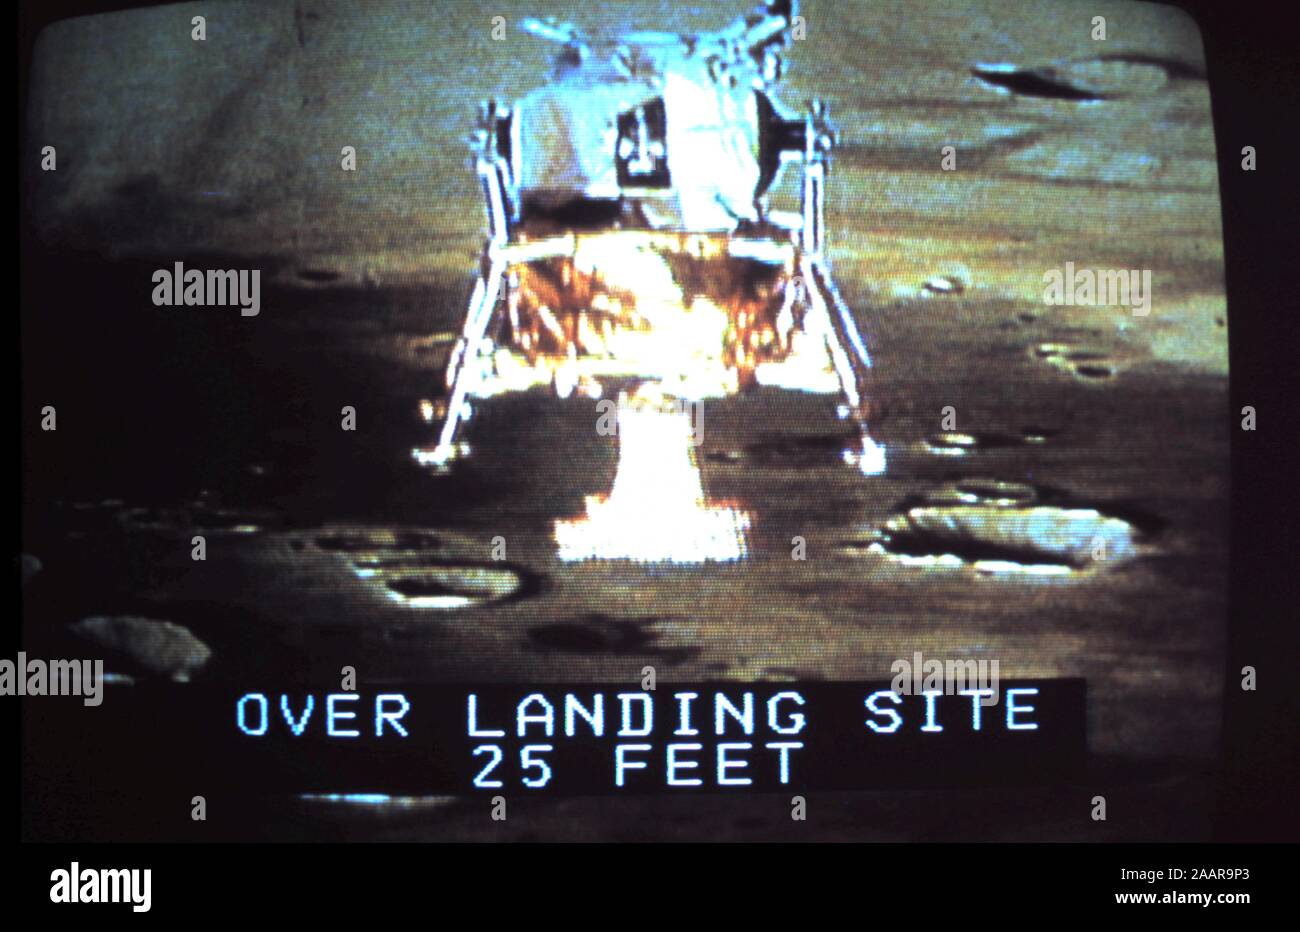 Teleclip - Lunar Module 'simulation' of Apollo 17 - Moon Landing with 'Over Landing Site 25 feet' subtitle; photograph taken directly from TV screen - circa 1972 Stock Photo